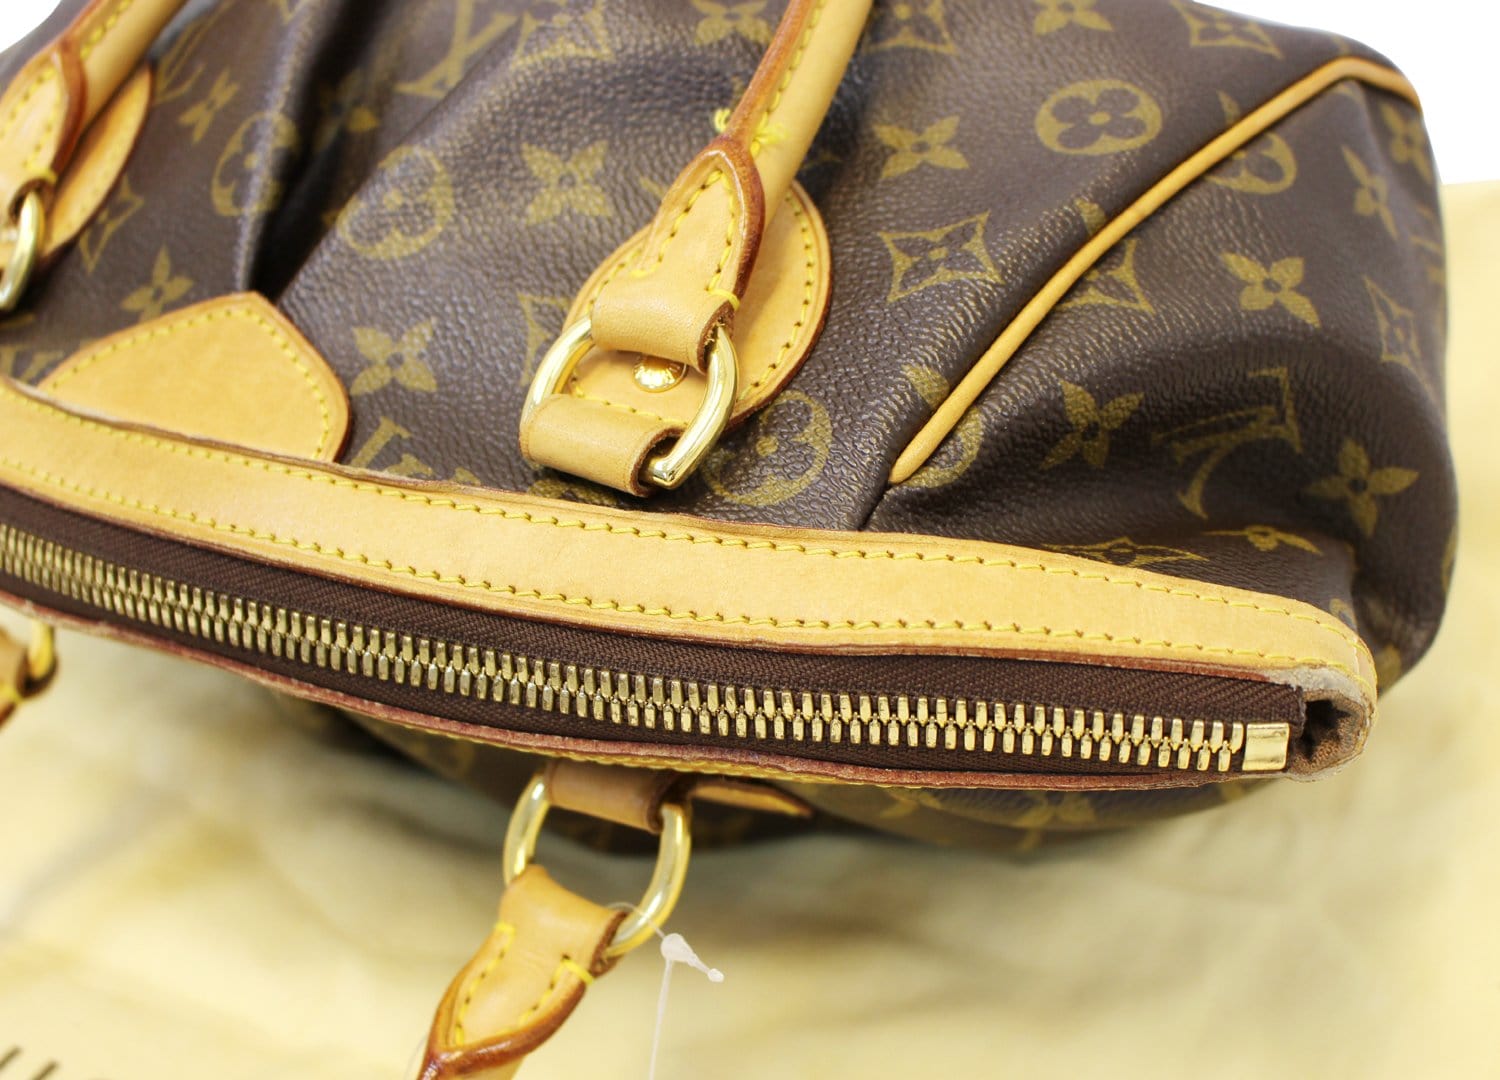 Louis Vuitton Tivoli PM Monogram Canvas Shoulder Handbag